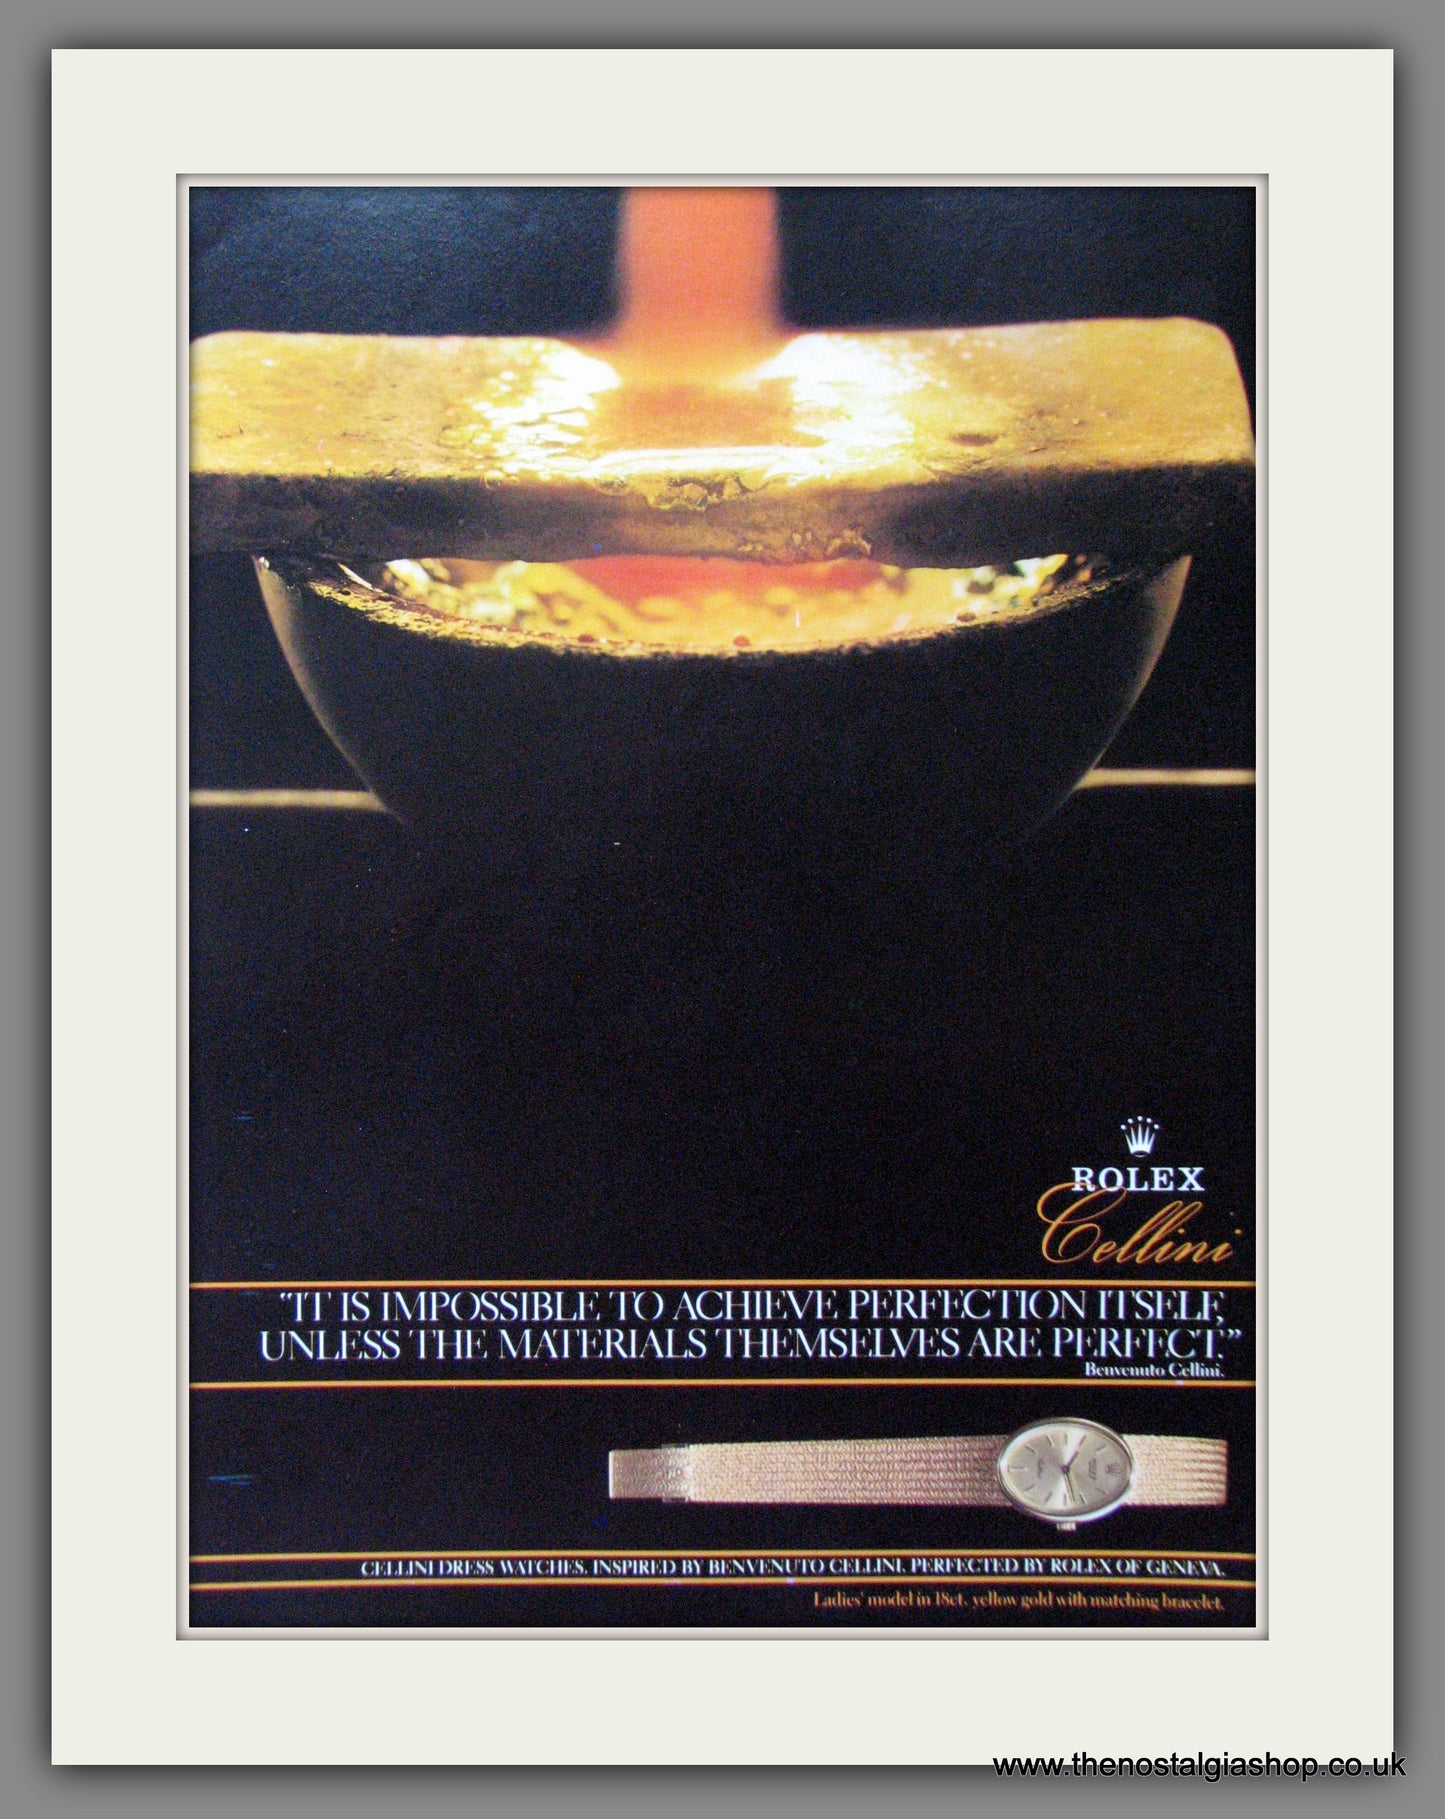 Rolex Cellini Watches. Original Advert 1983 (ref AD54351)